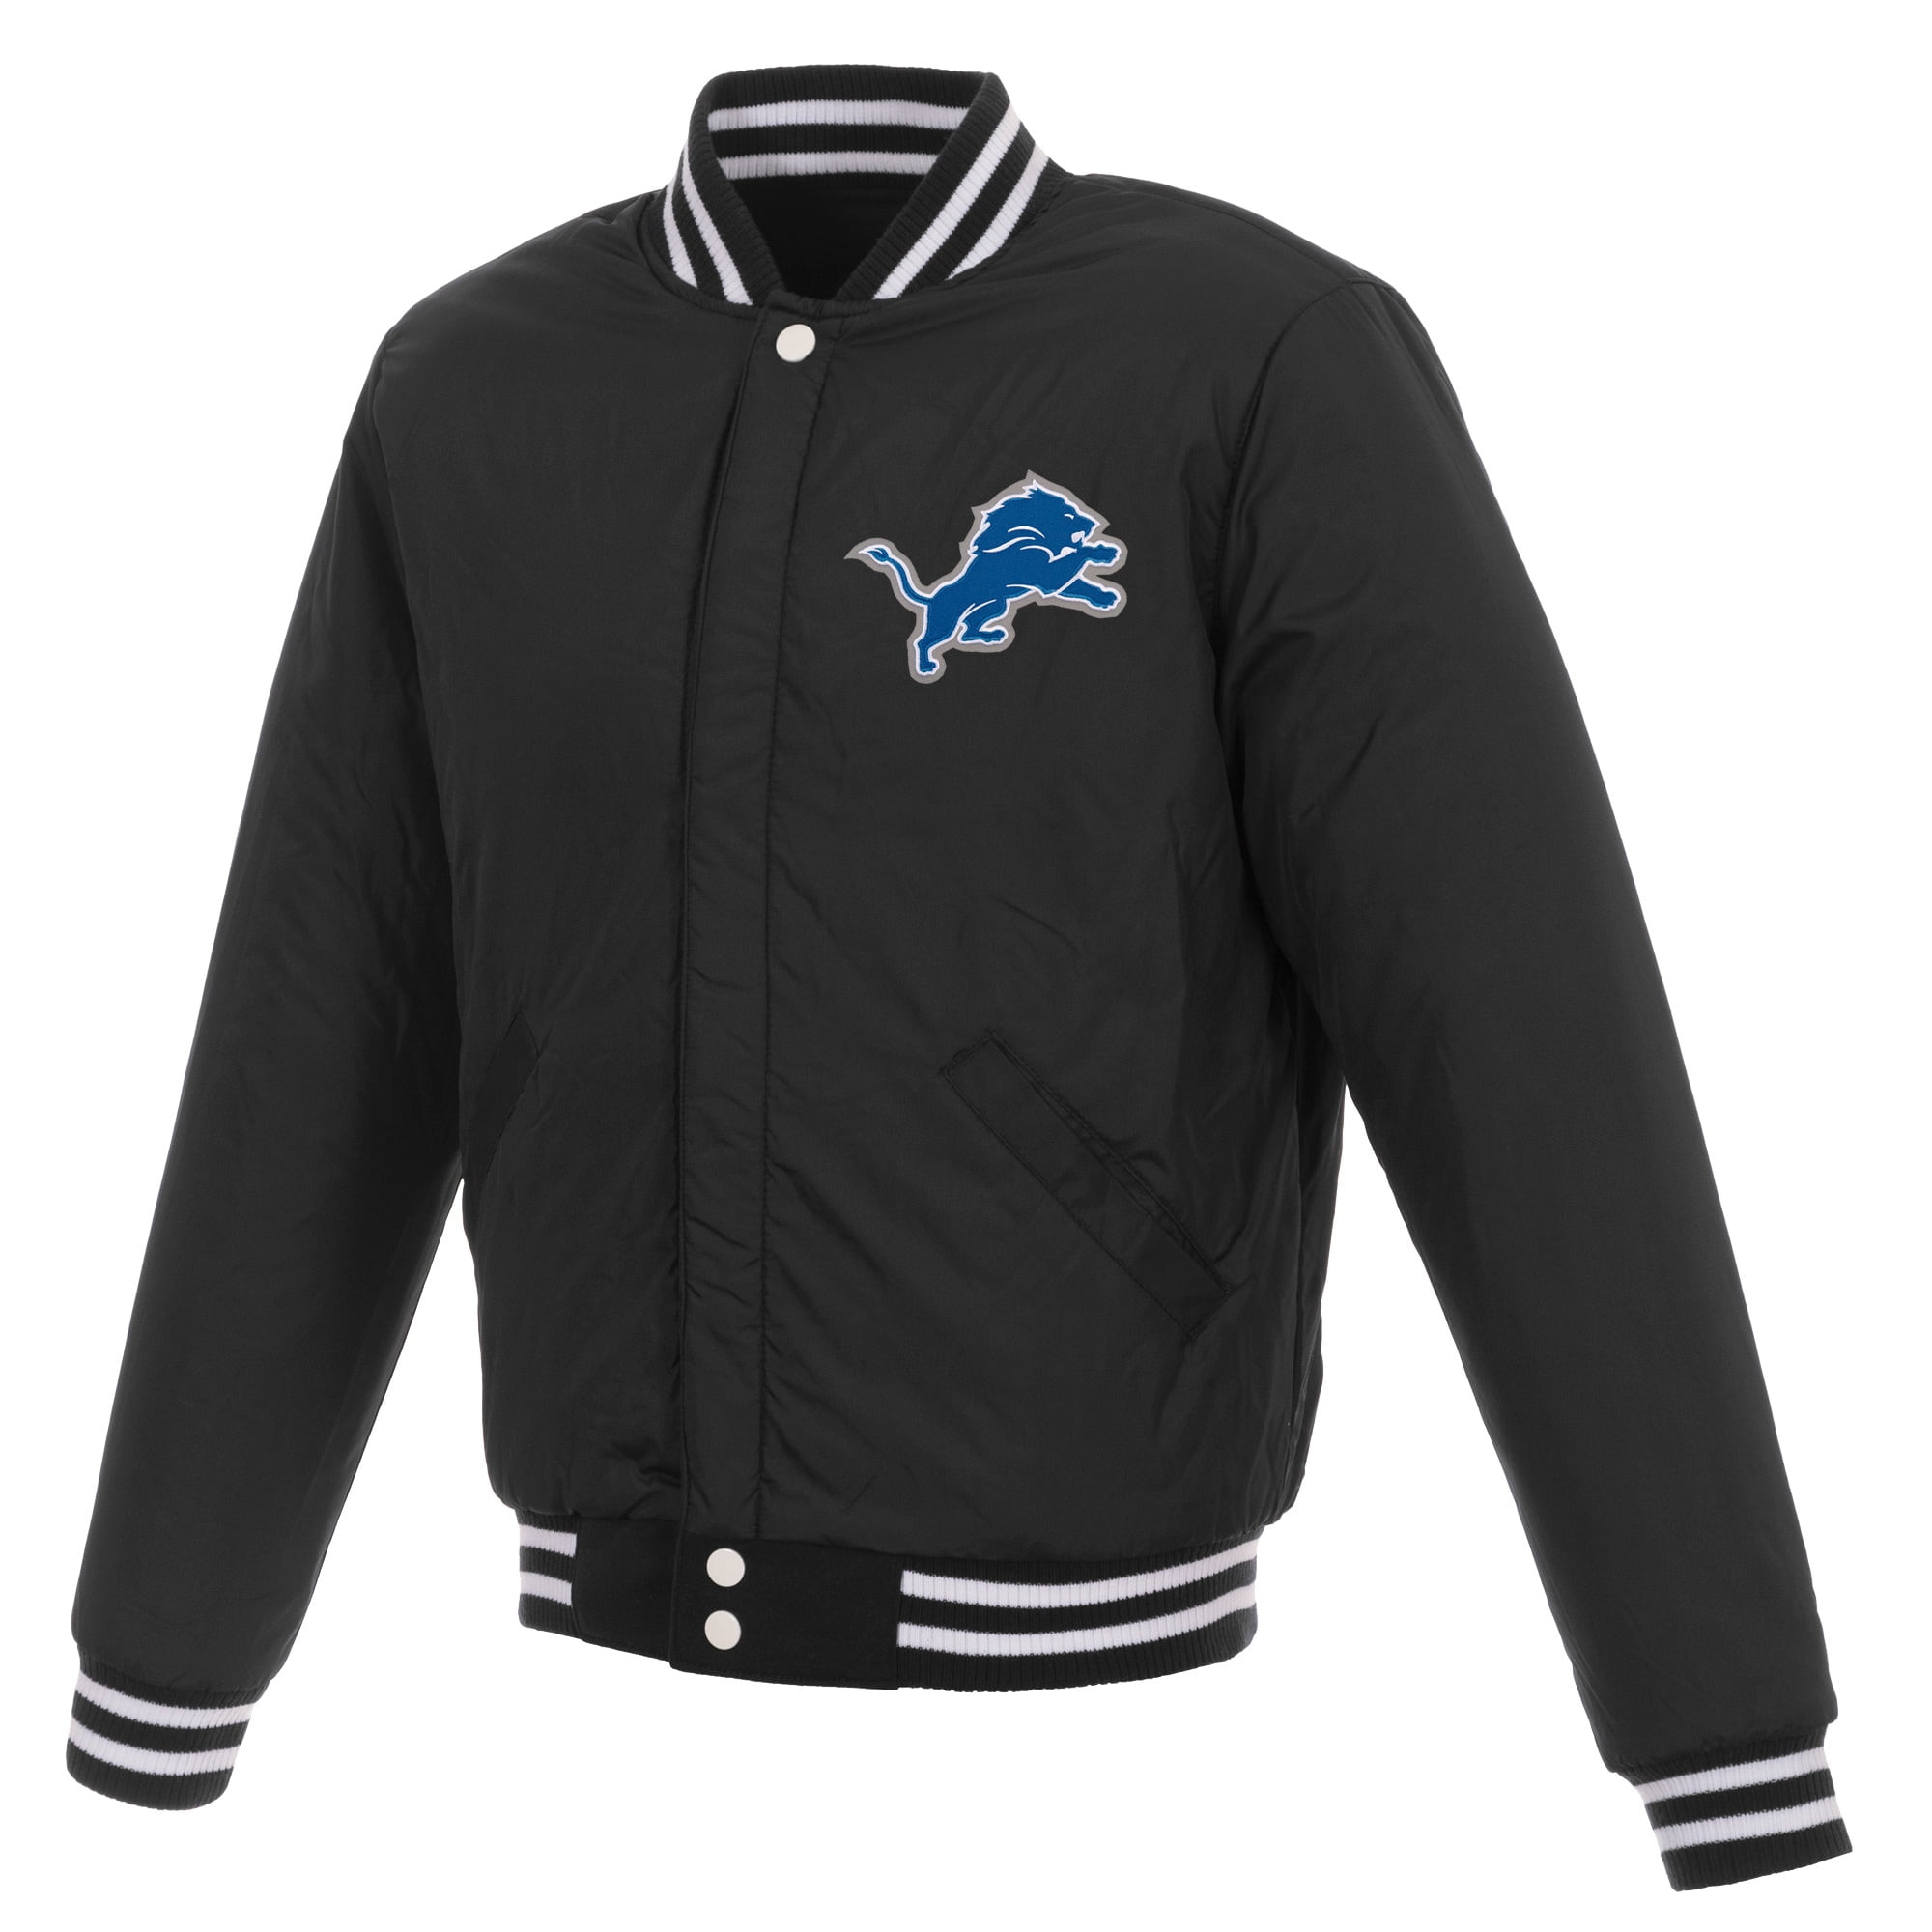 Men's NFL Pro Line by Fanatics Branded Black/White Detroit Lions Reversible  Fleece Full-Snap Jacket with Faux Leather - Walmart.com